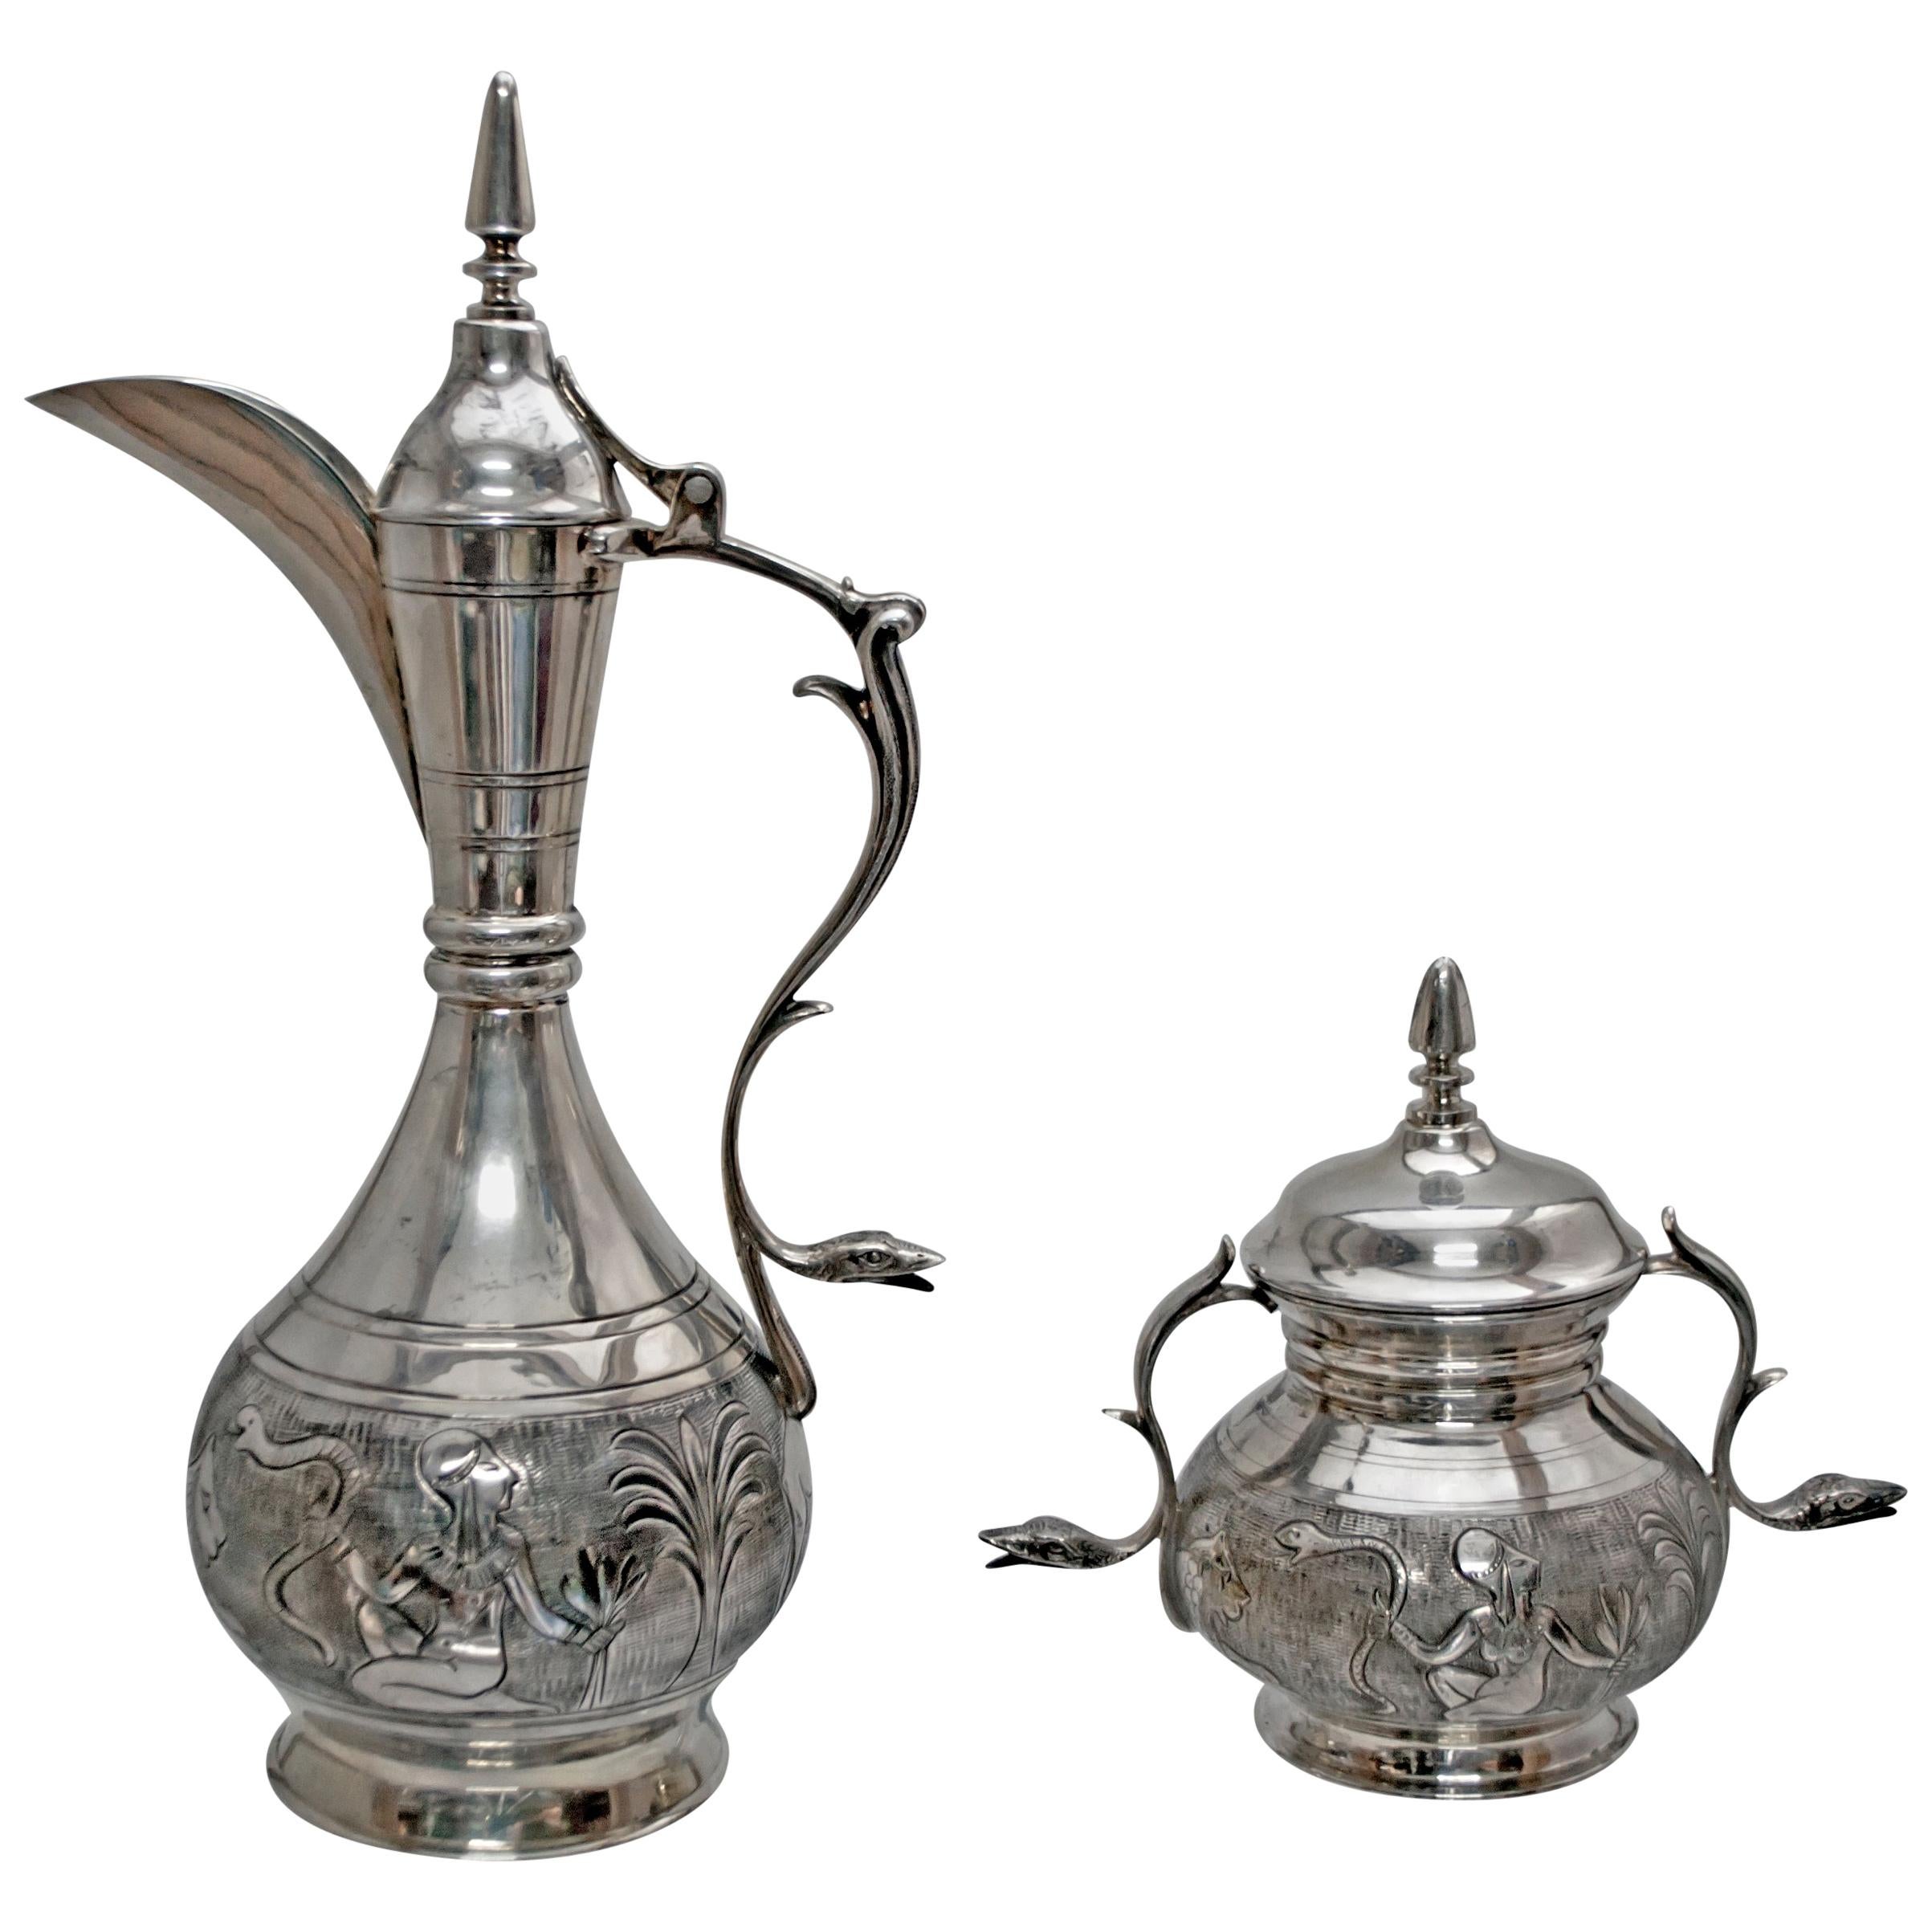 Castaudi & Gautero Imperial Silver Italian Tea Set with Egyptian Details, 1940s